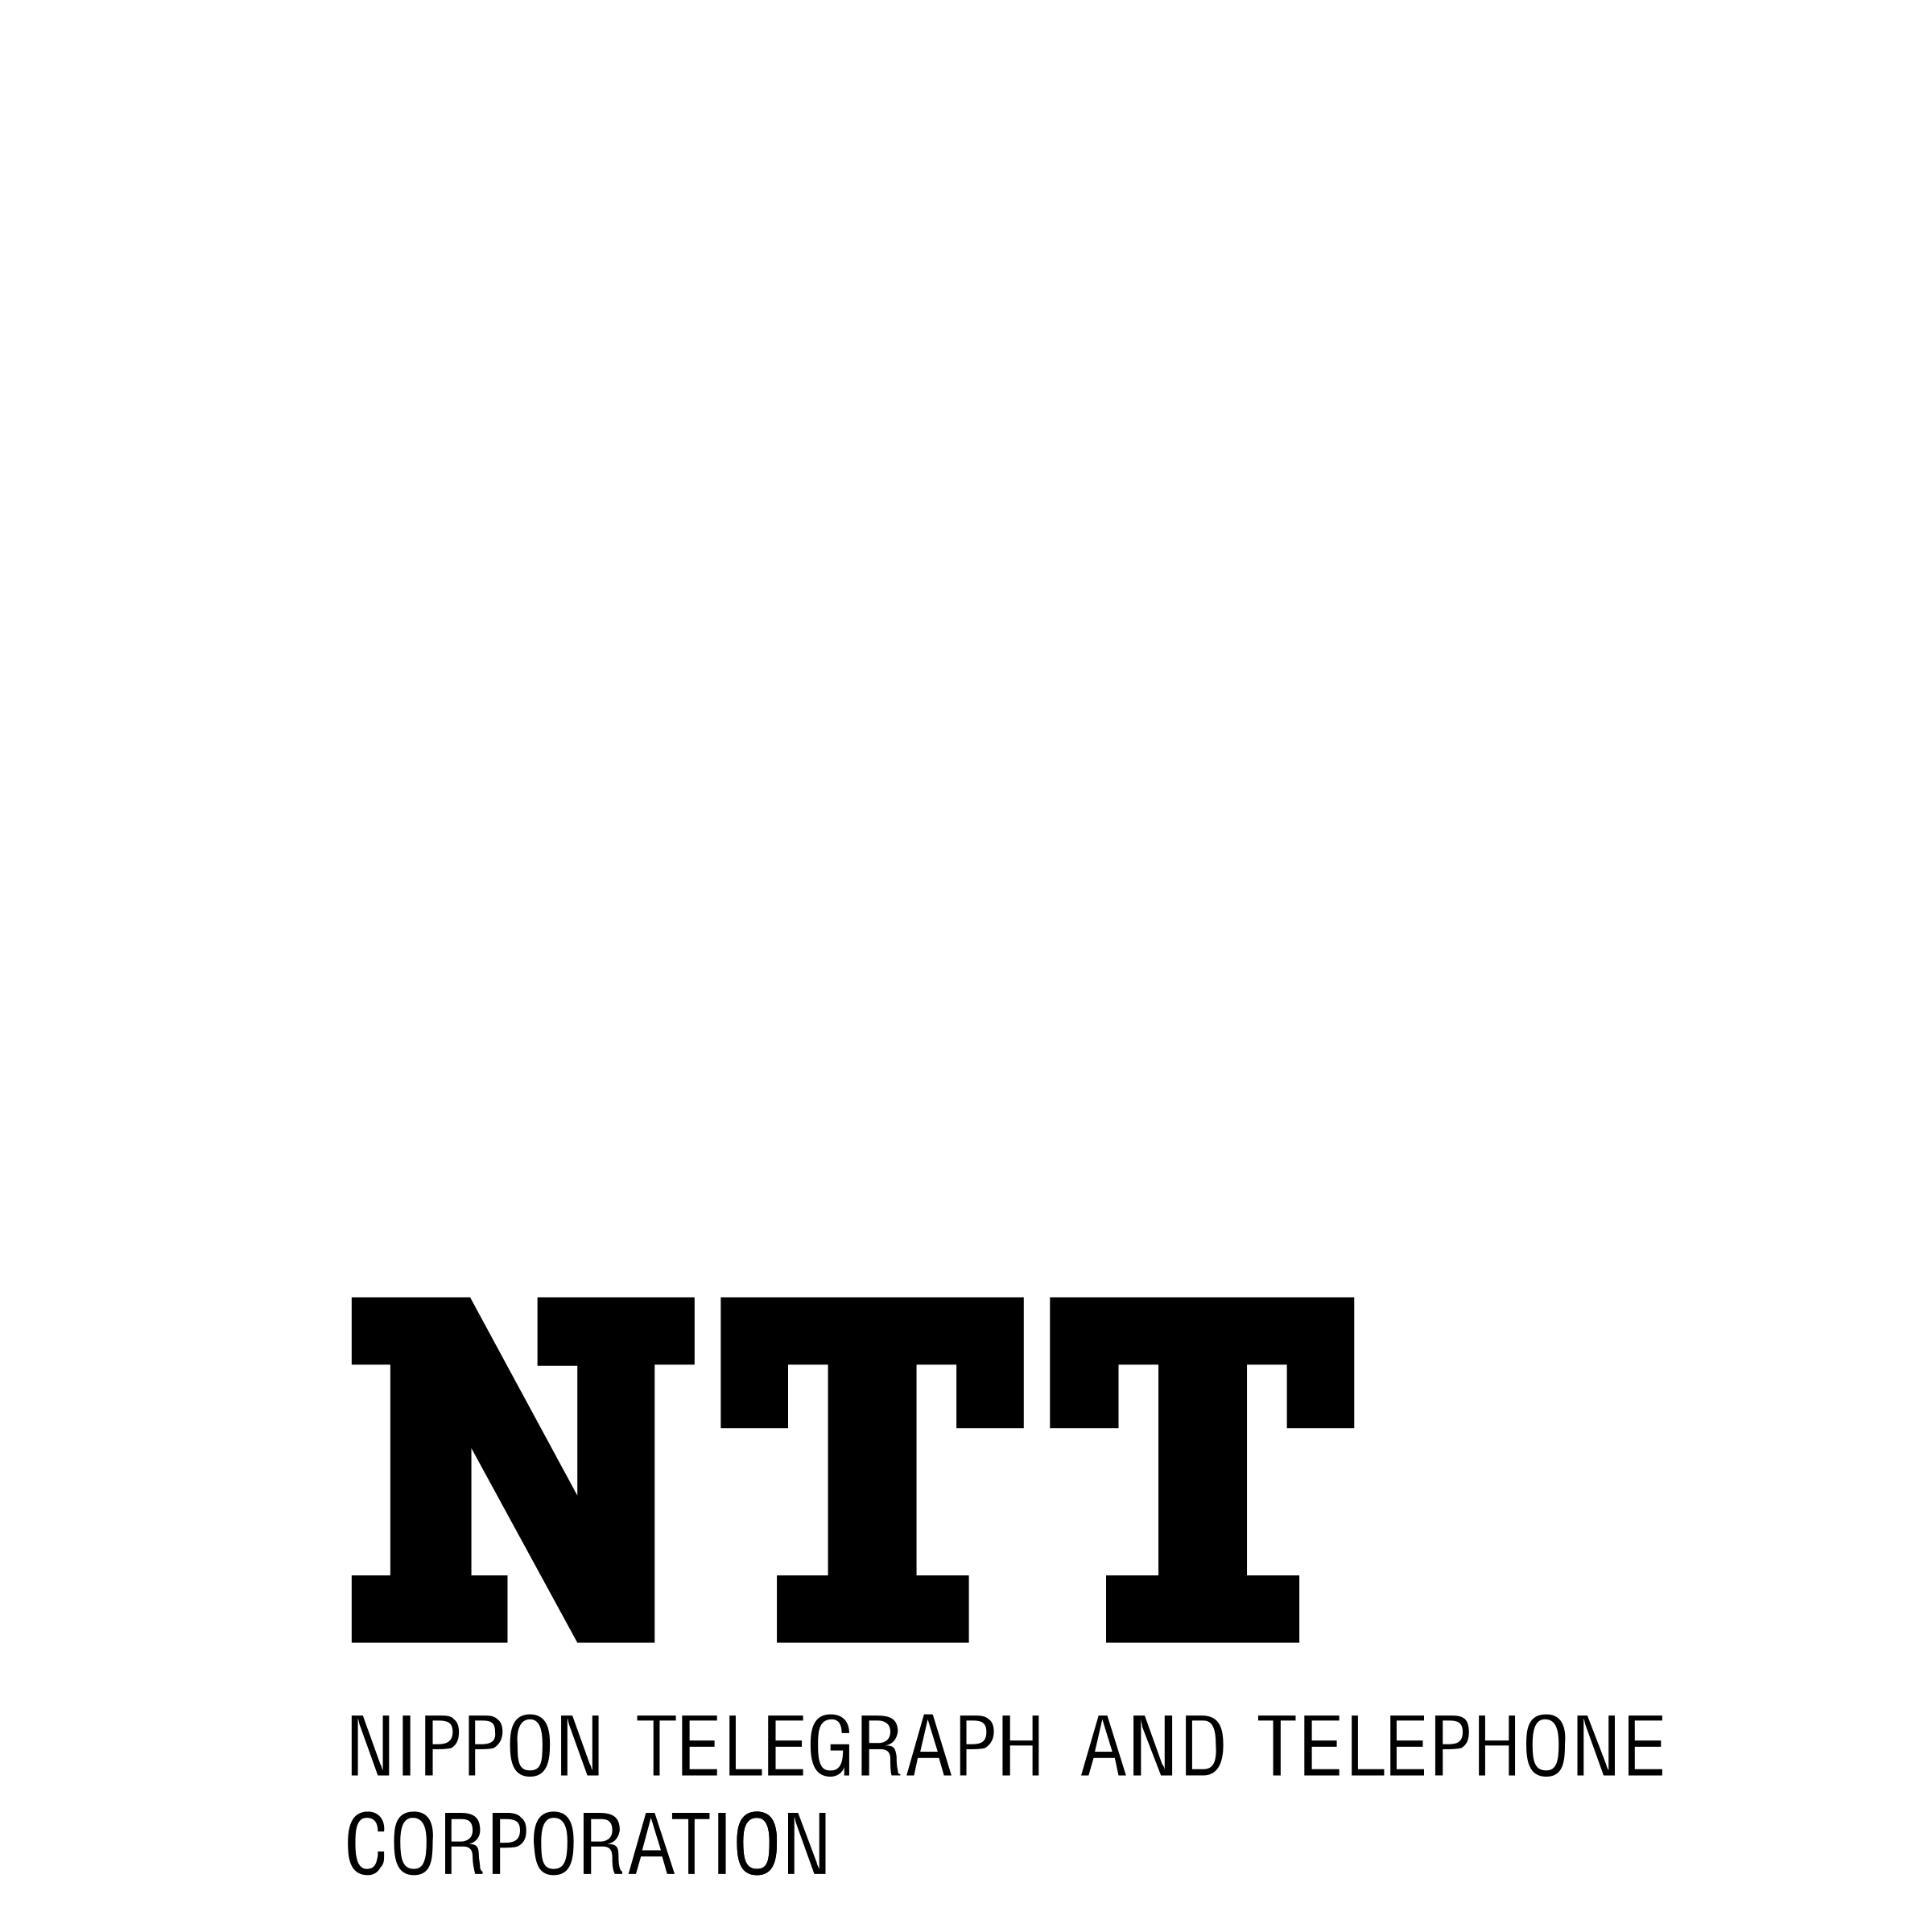 NTT Logo - NTT Logo PNG Transparent & SVG Vector